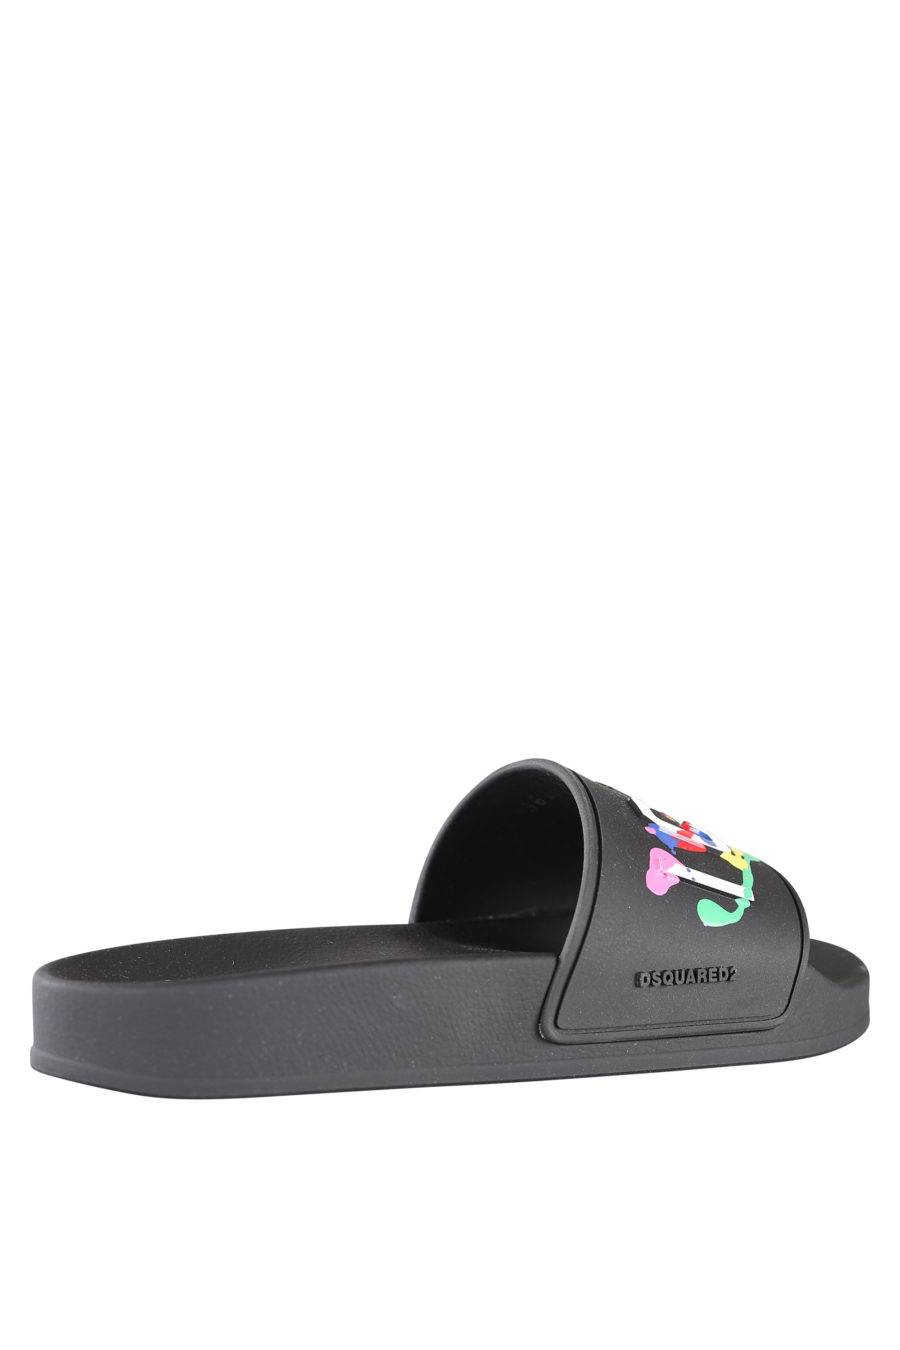 Black flip flops with "icon splash" logo - IMG 9955